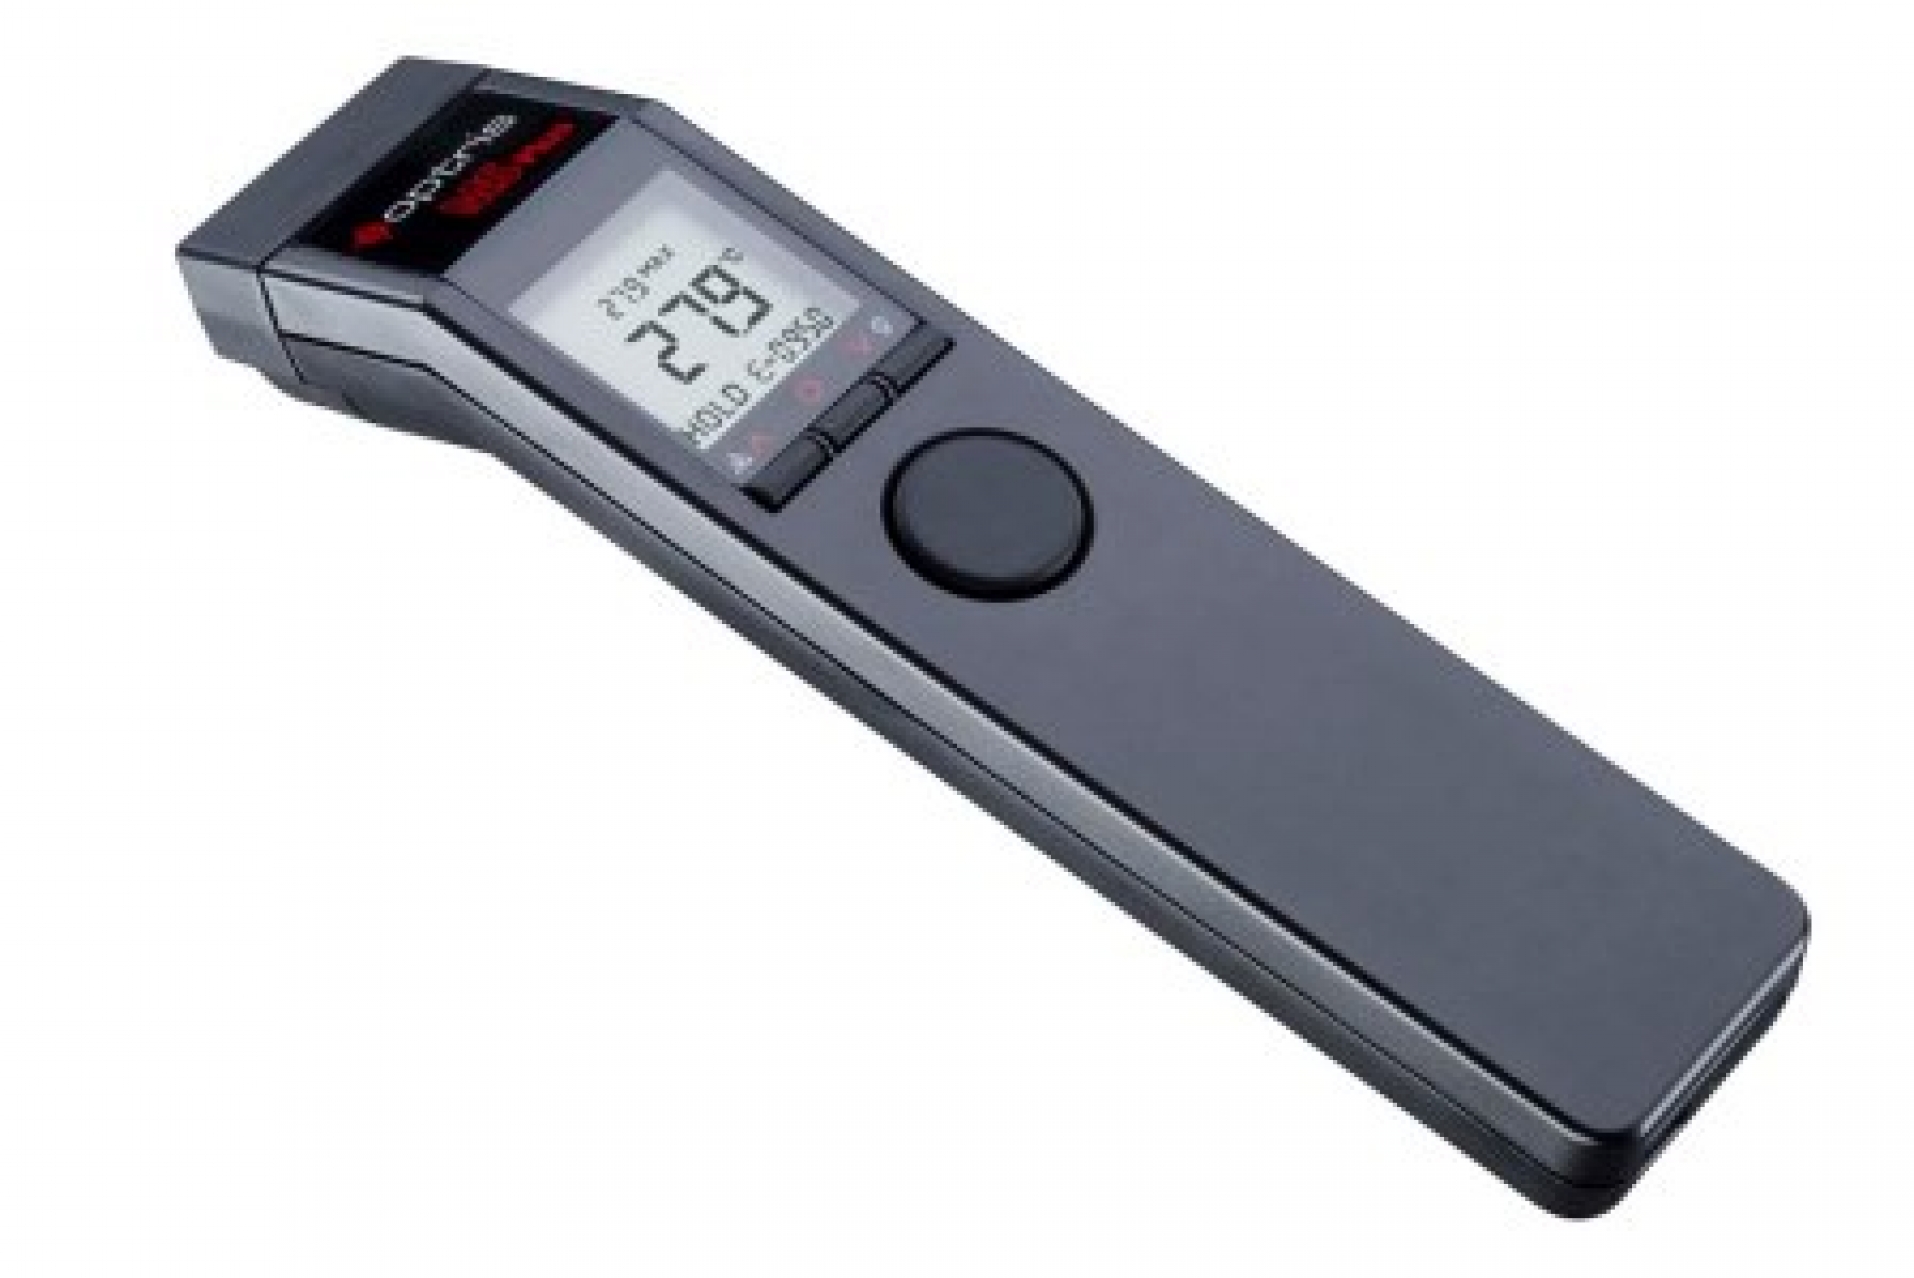 Termometro infrarossi industriale TM-969